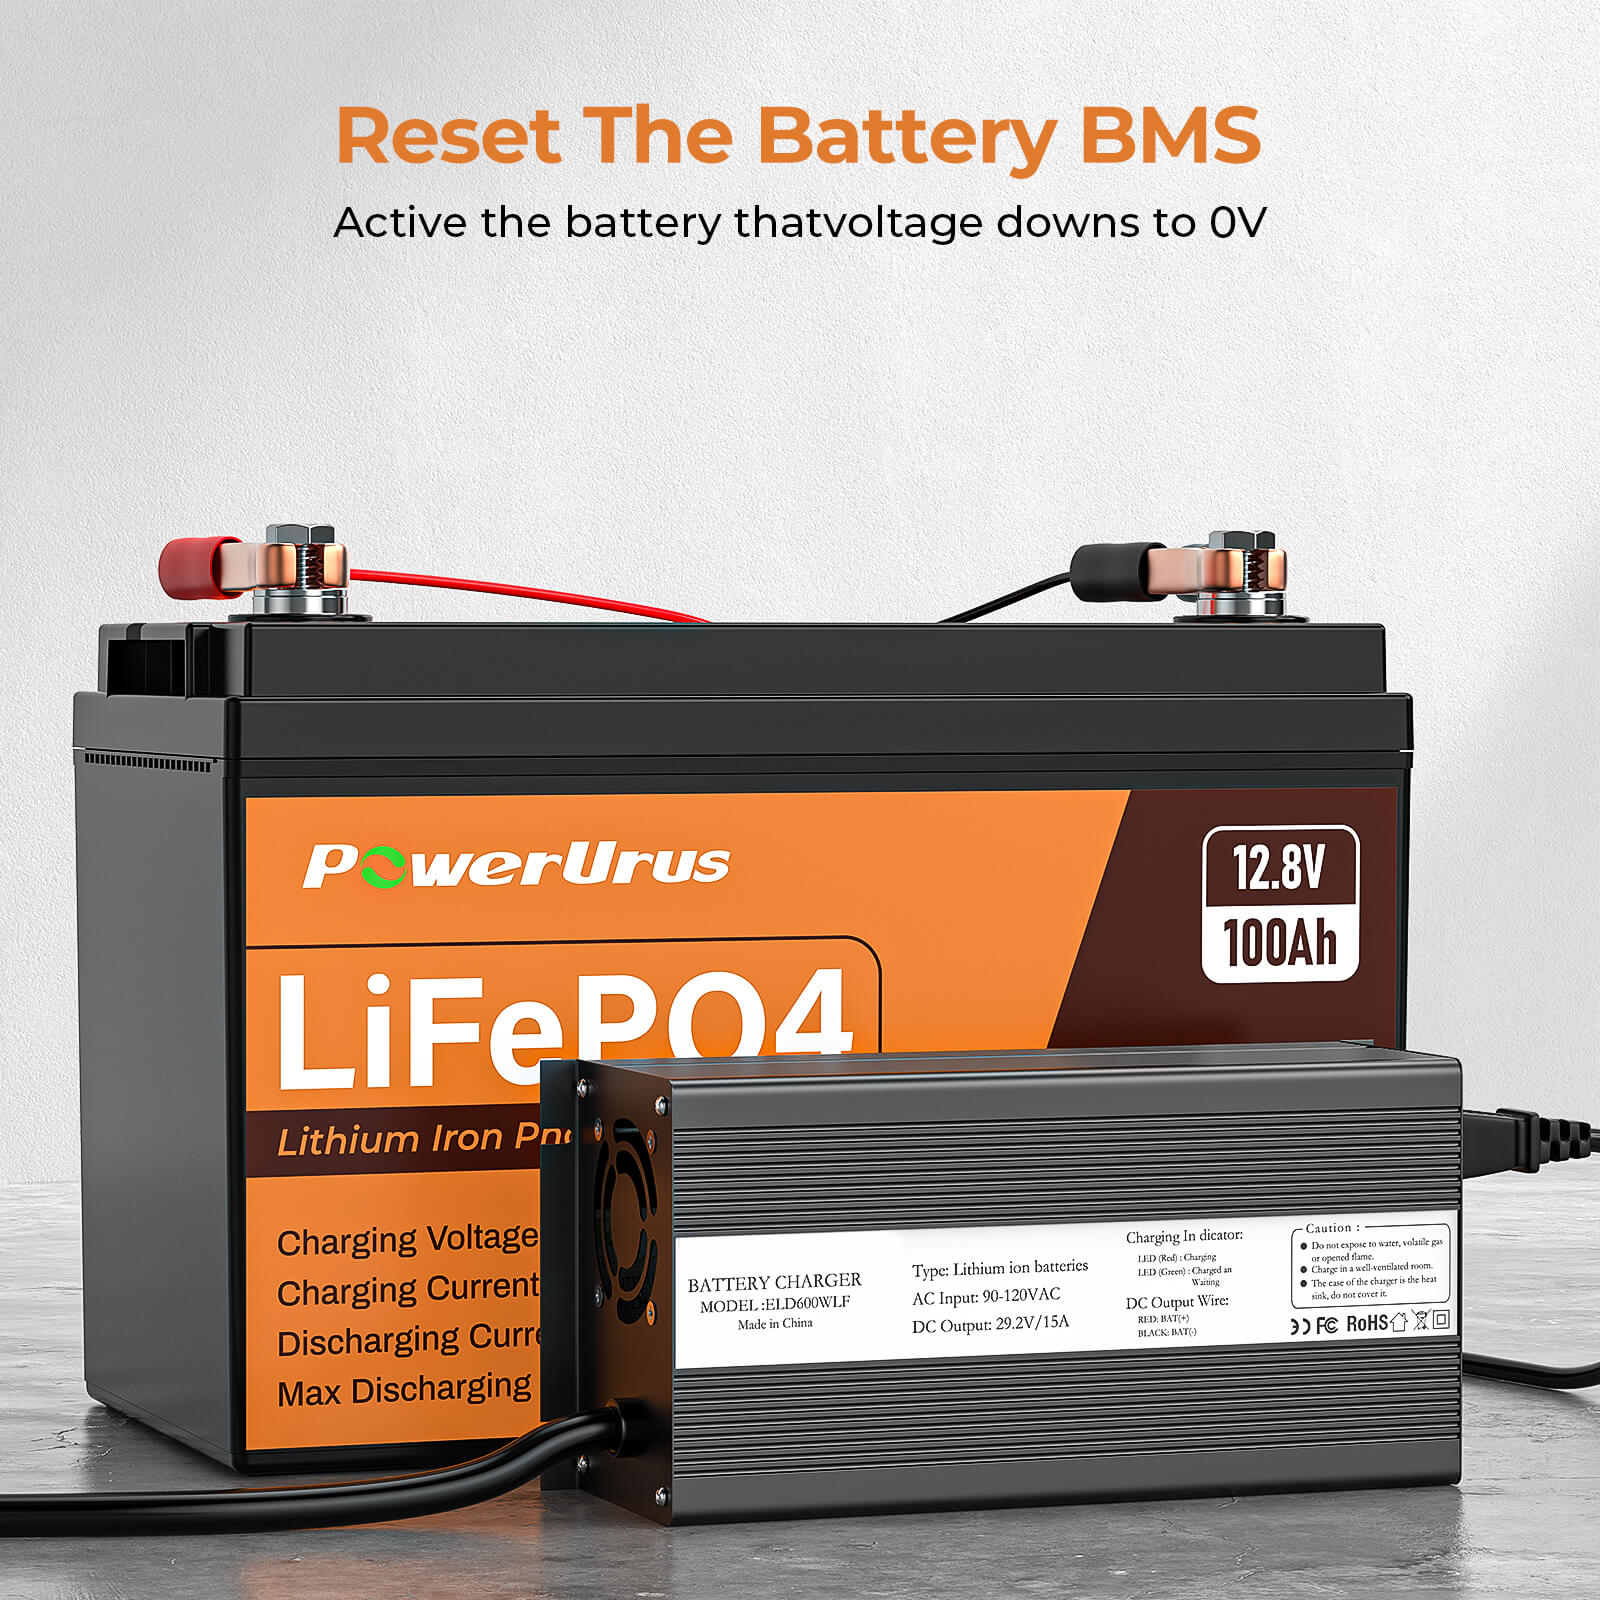 PowerUrus 29.2V-15A P085MI LiFePO4 Battery charger – PowerUrus